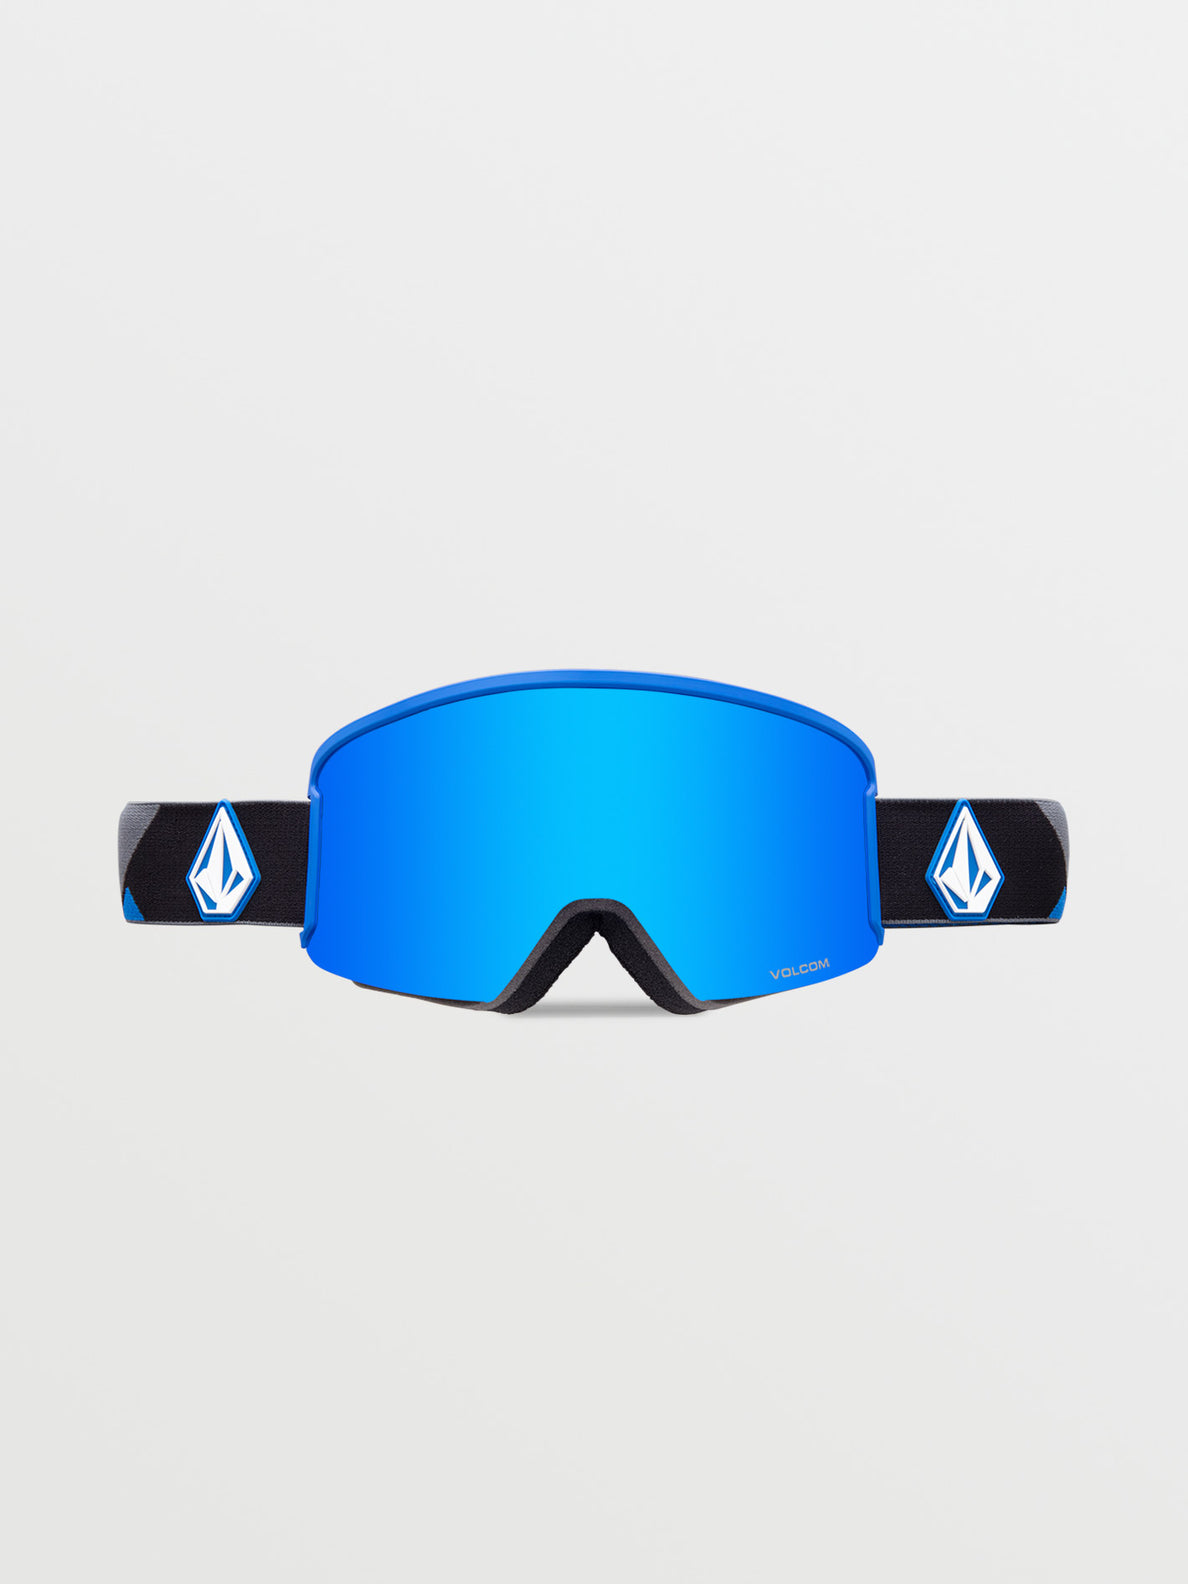 Volcom Garden Snowboard Goggles - Blue / Dark Grey / Blue Chrome + Bonus Yellow Lens